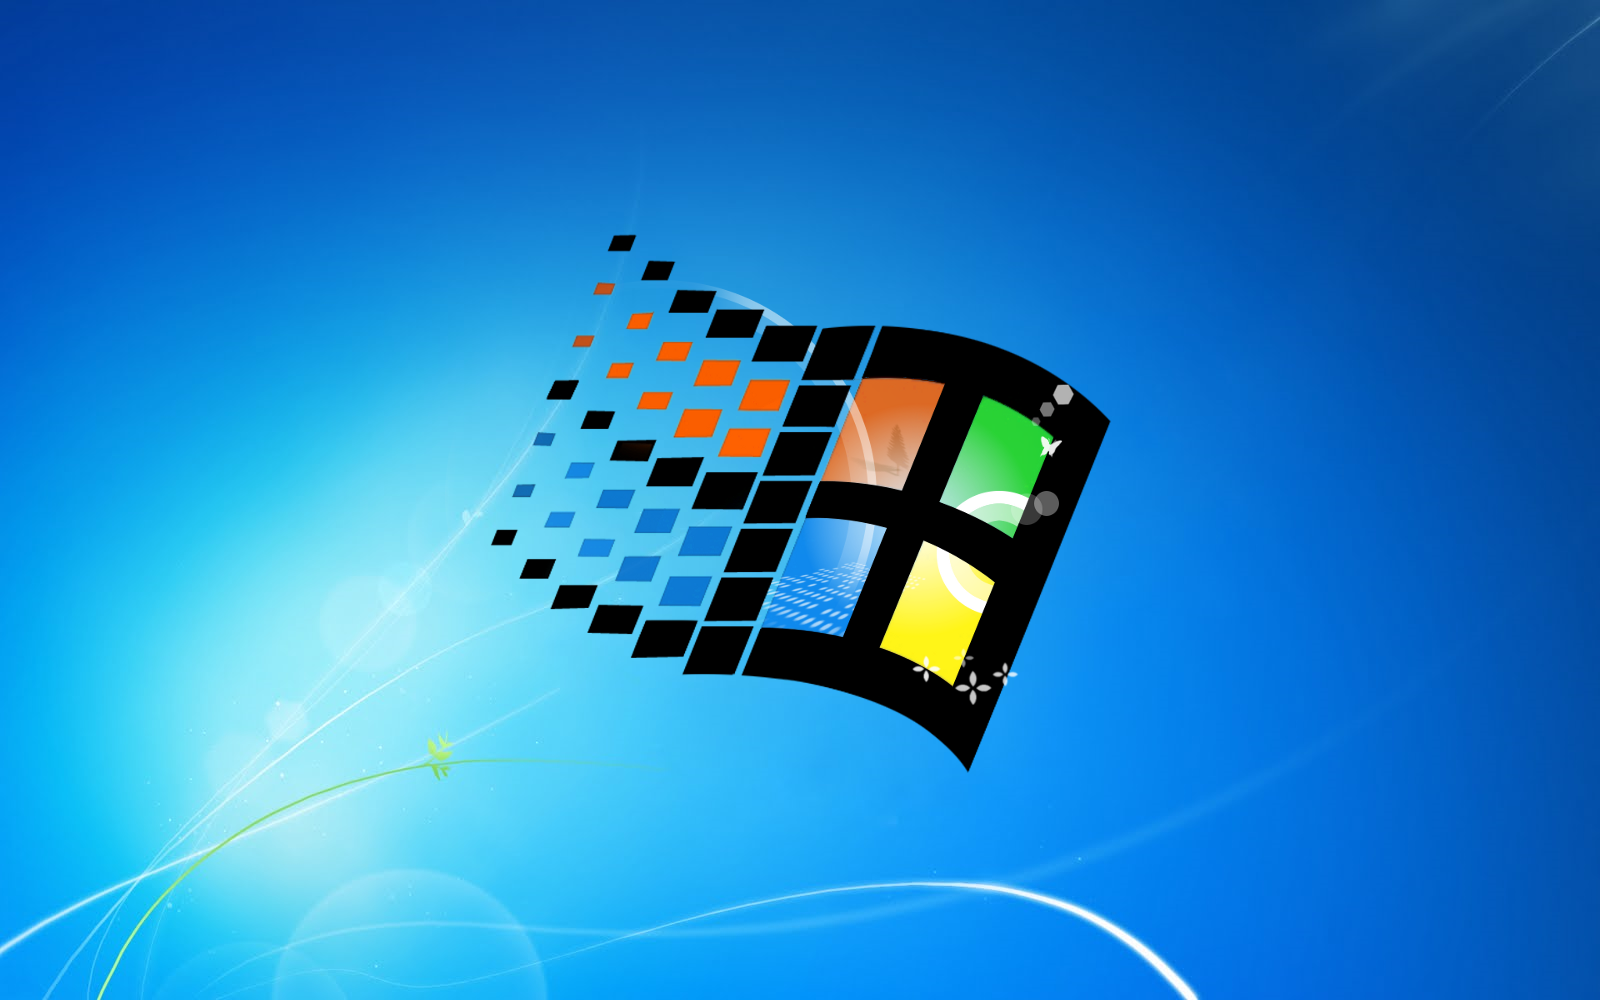 Windows 95 Wallpapers